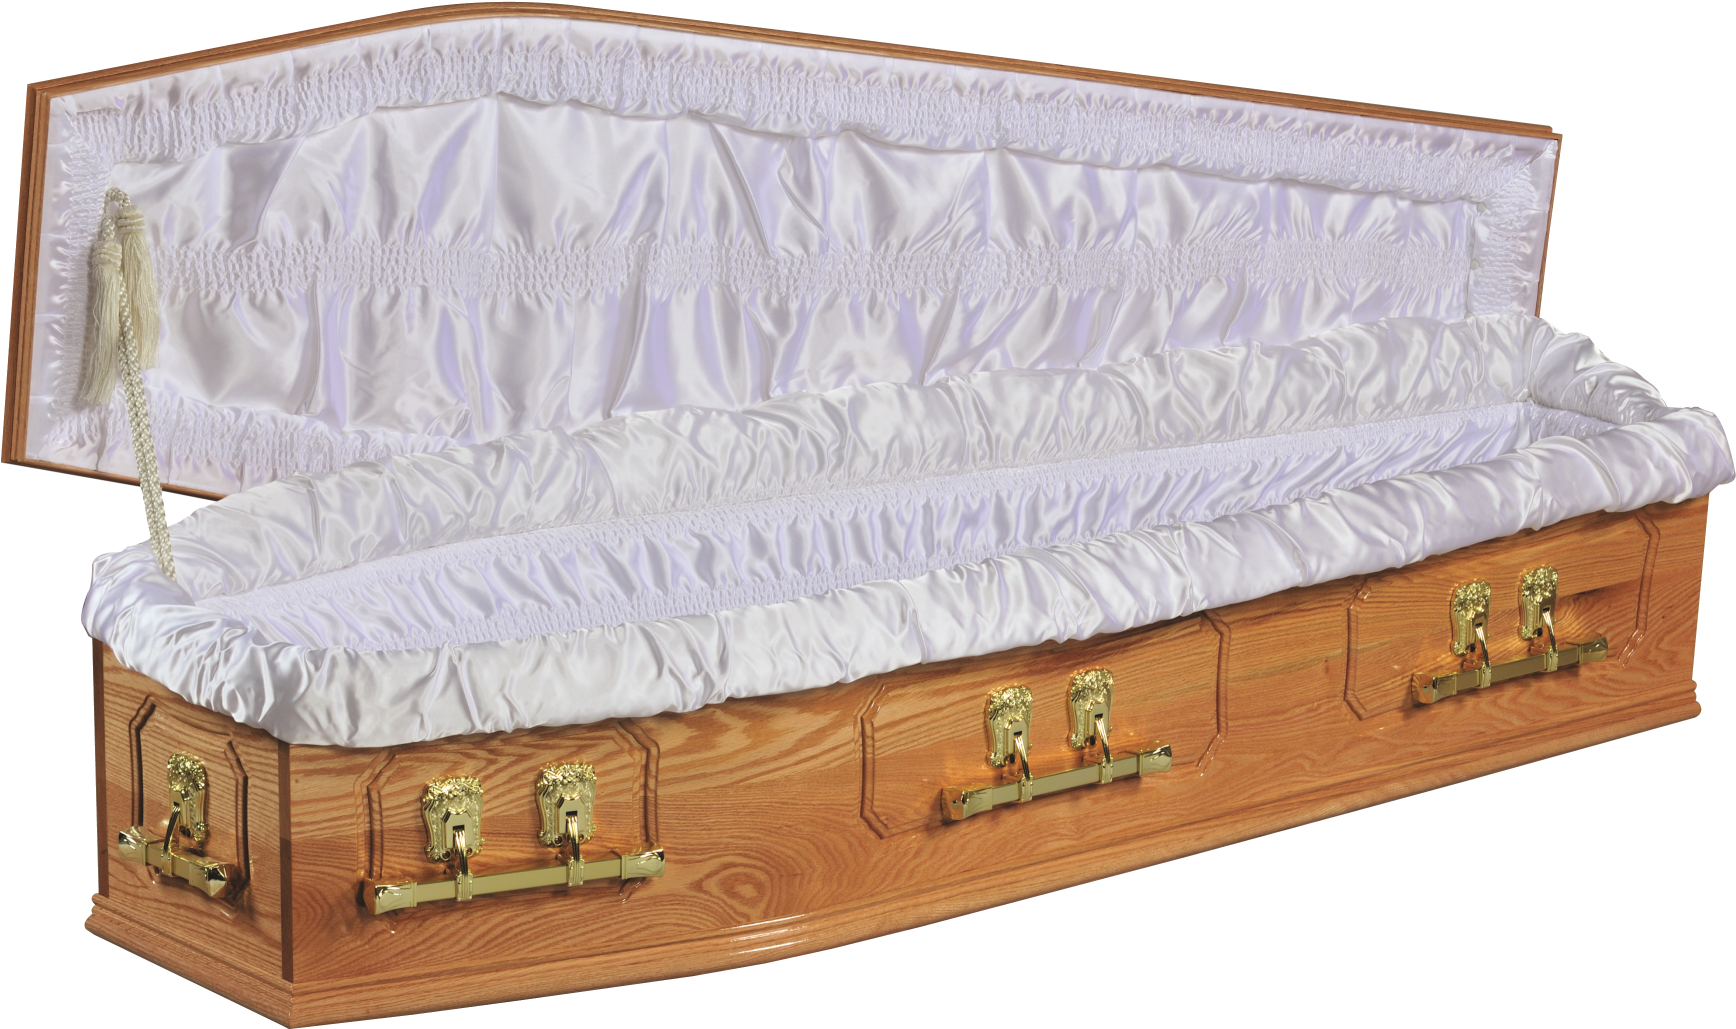 Coffin download. Открытый гроб сбоку. Гроб с боку. Гроб для фотошопа.